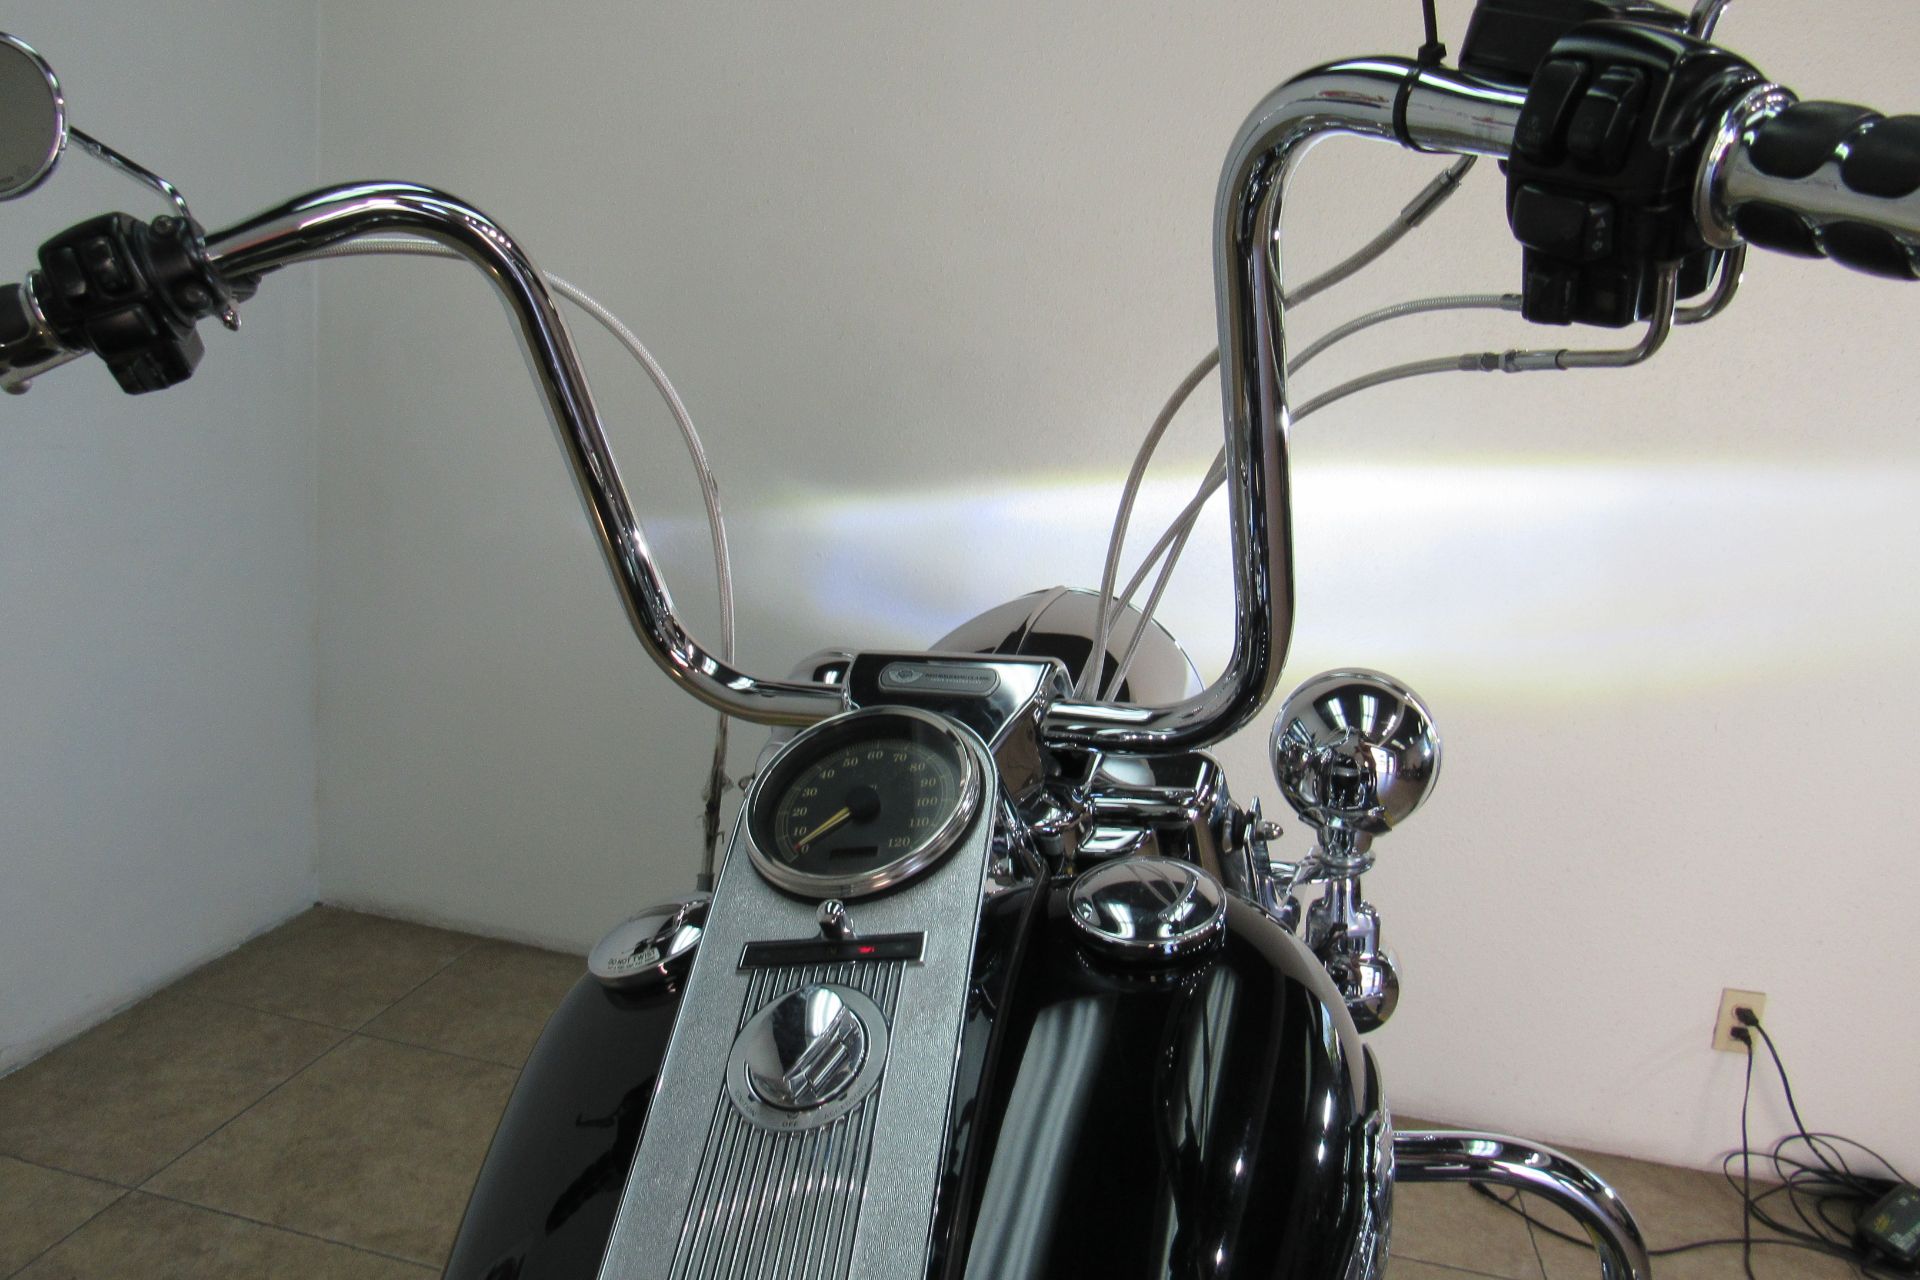 2003 Harley-Davidson FLHRCI Road King® Classic in Temecula, California - Photo 29